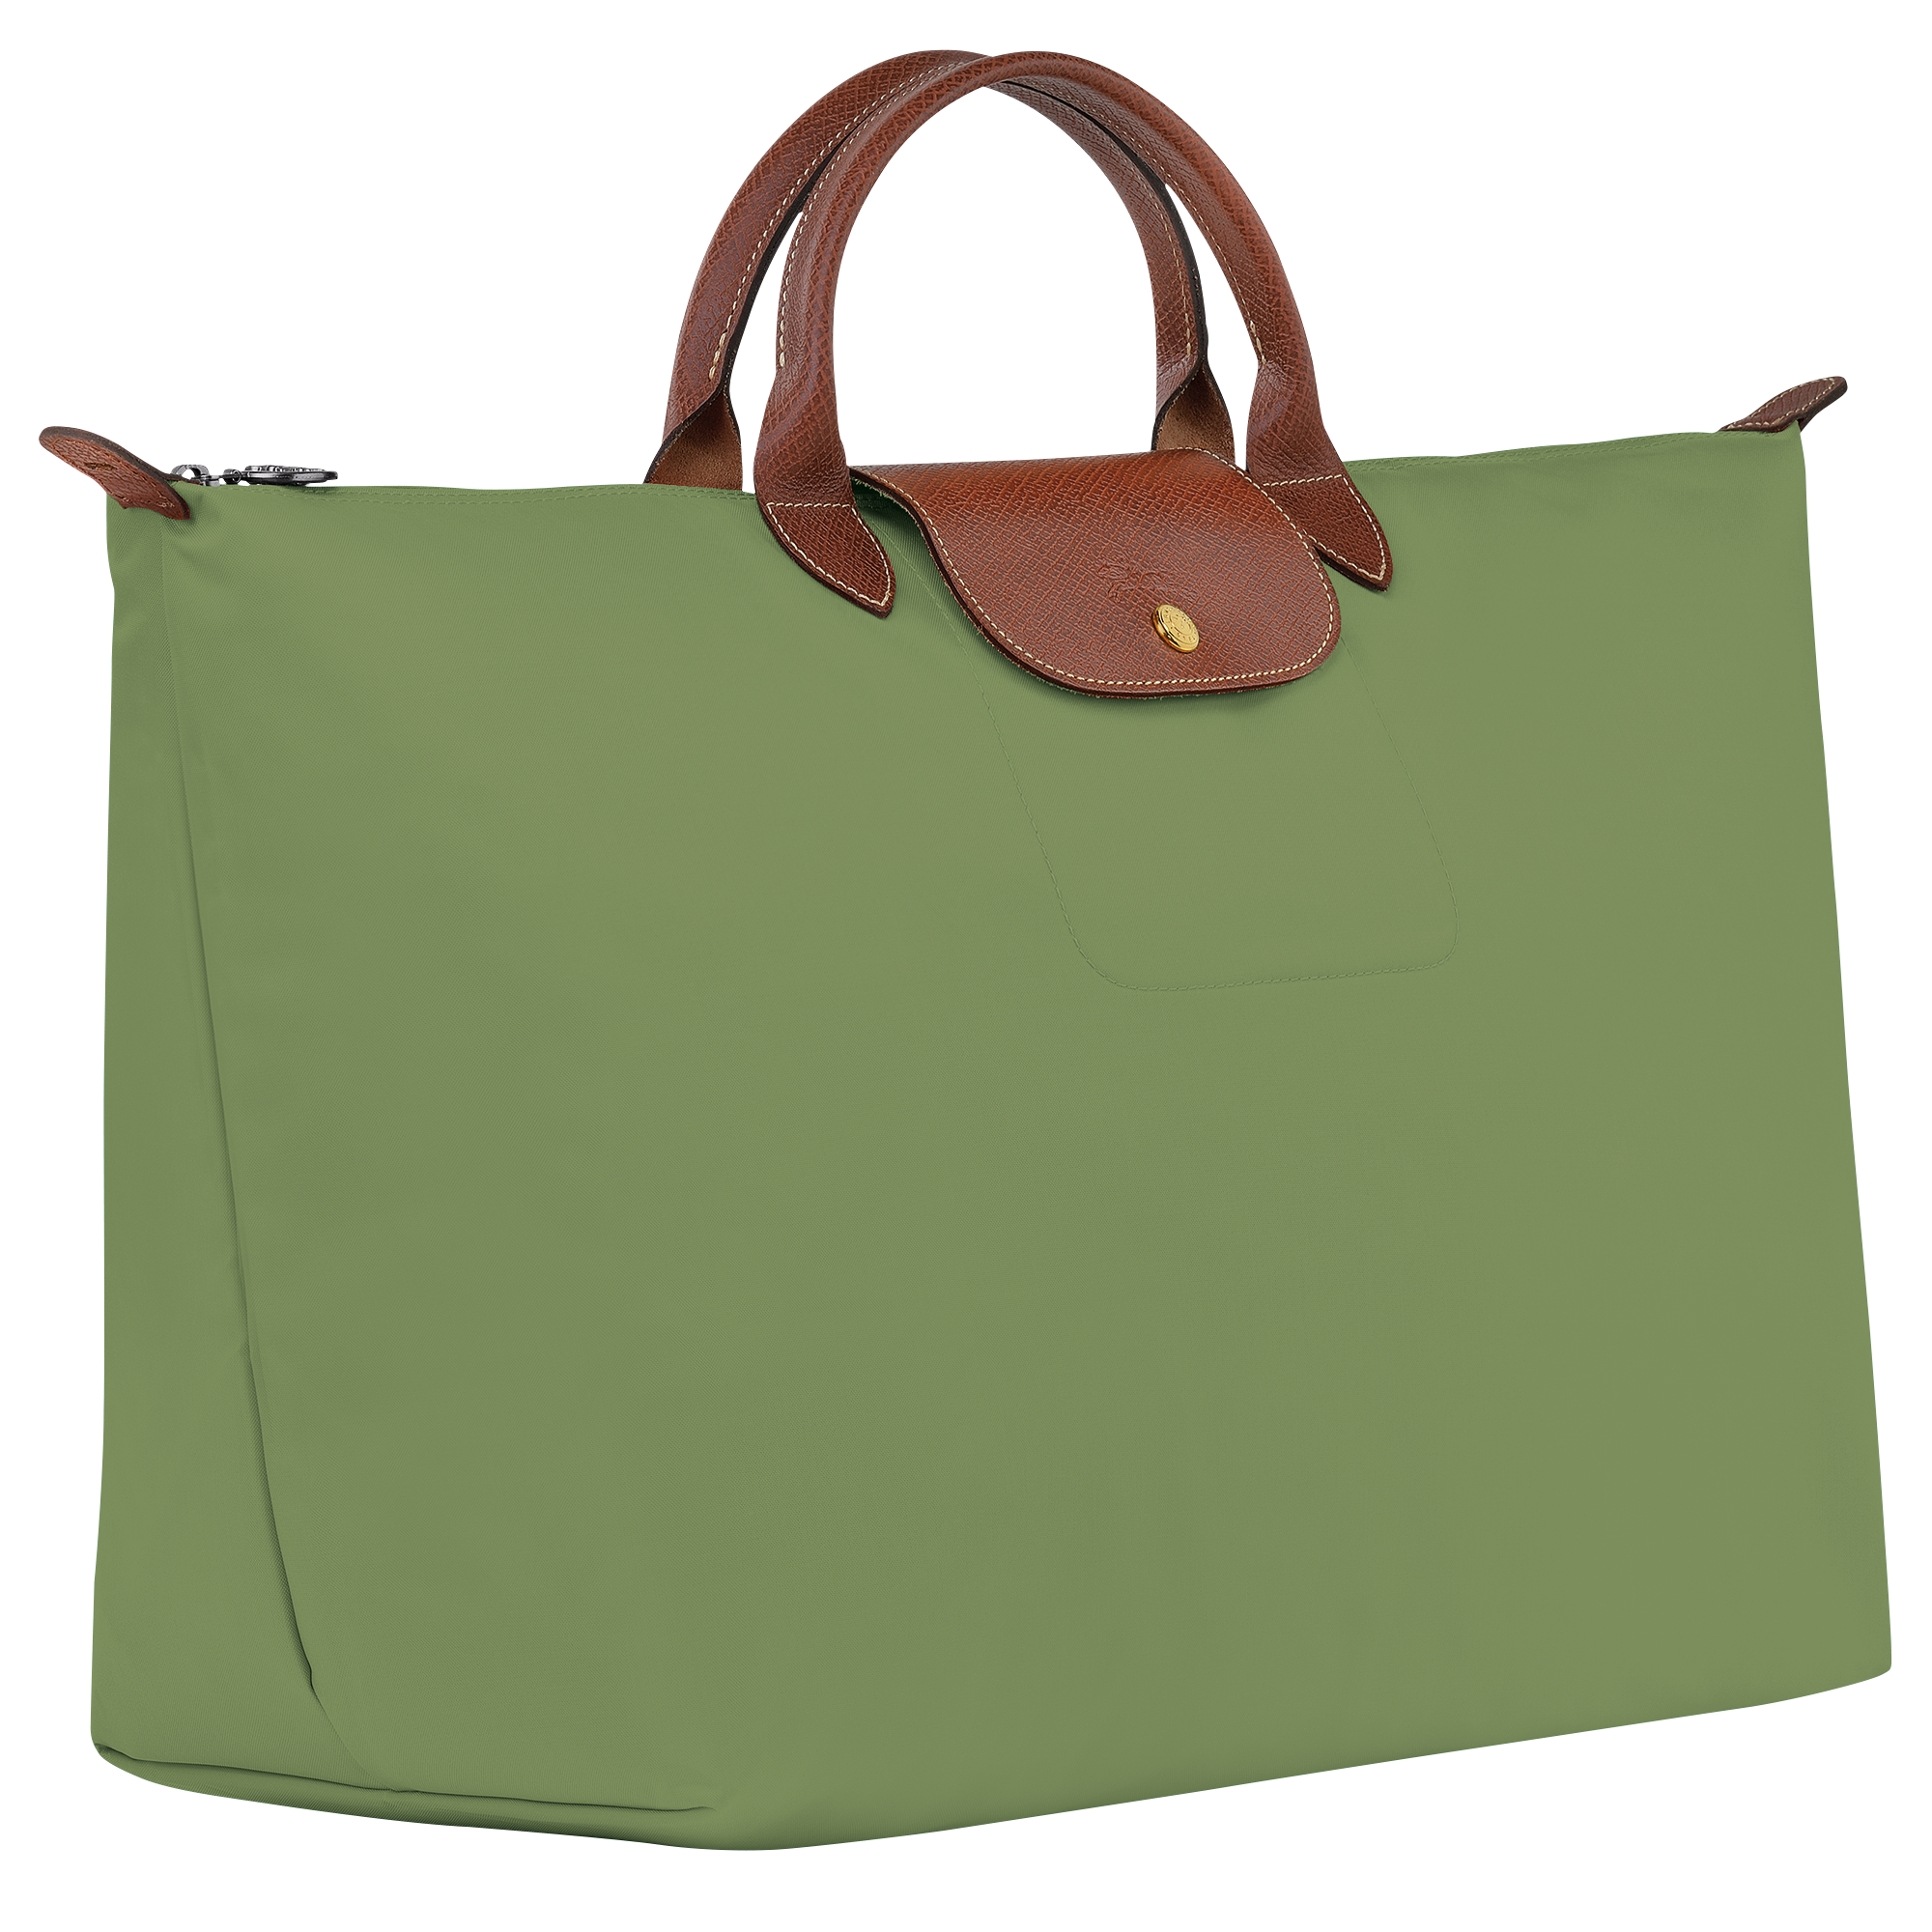 Le Pliage Original 旅行袋 S, 苔蘚綠色